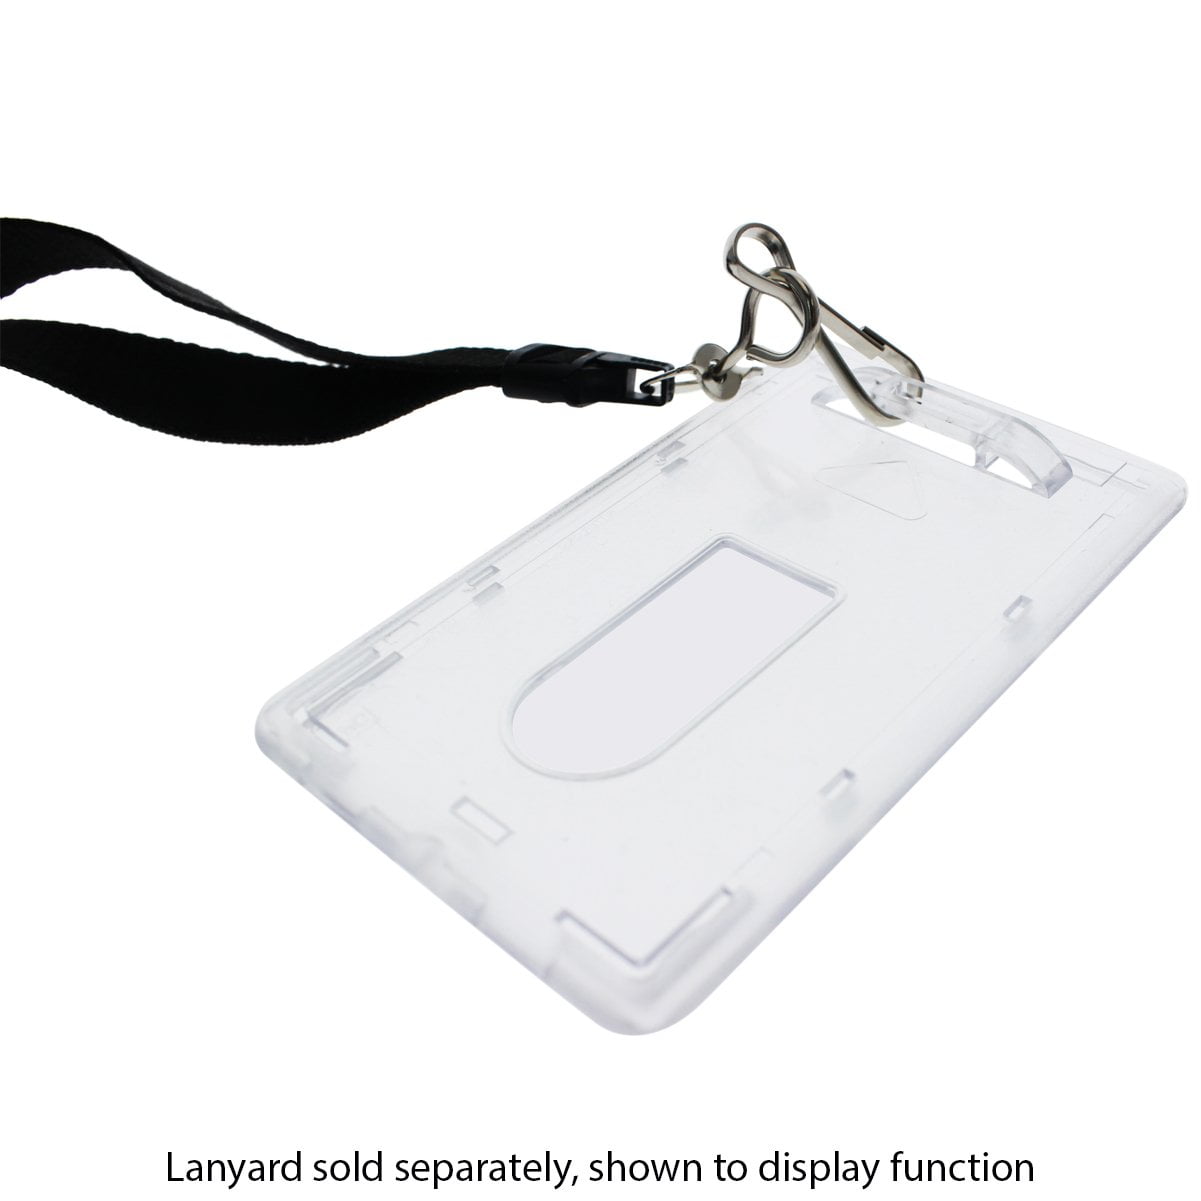 Bulk-buy Custom Clear Hard Plastic ID Card Holders, Promotional